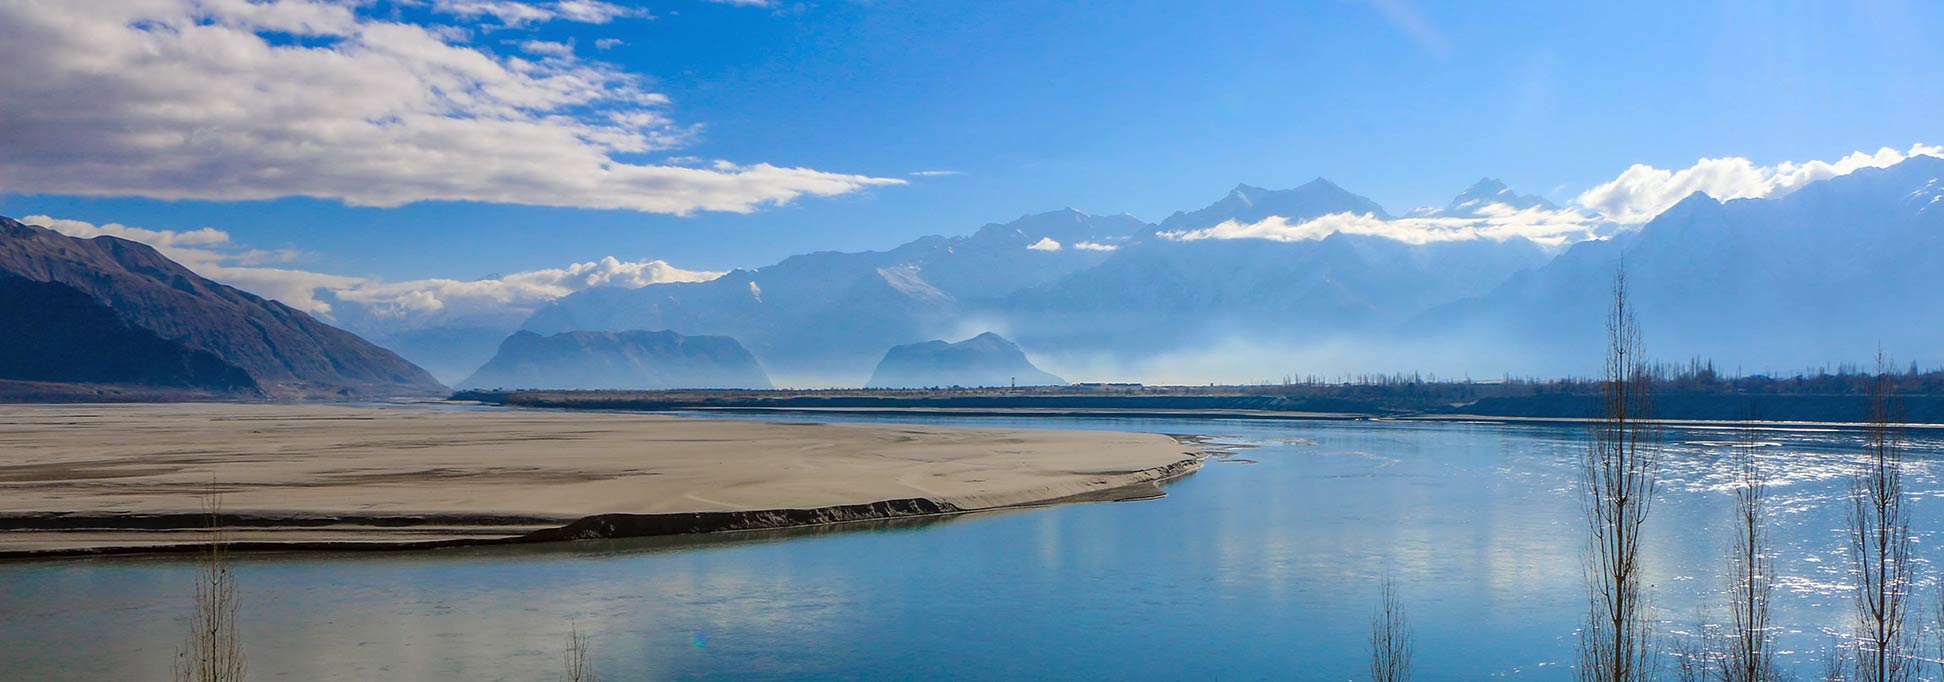 Indus river at Skardu city, in Gilgit-Baltistan, Pakistan